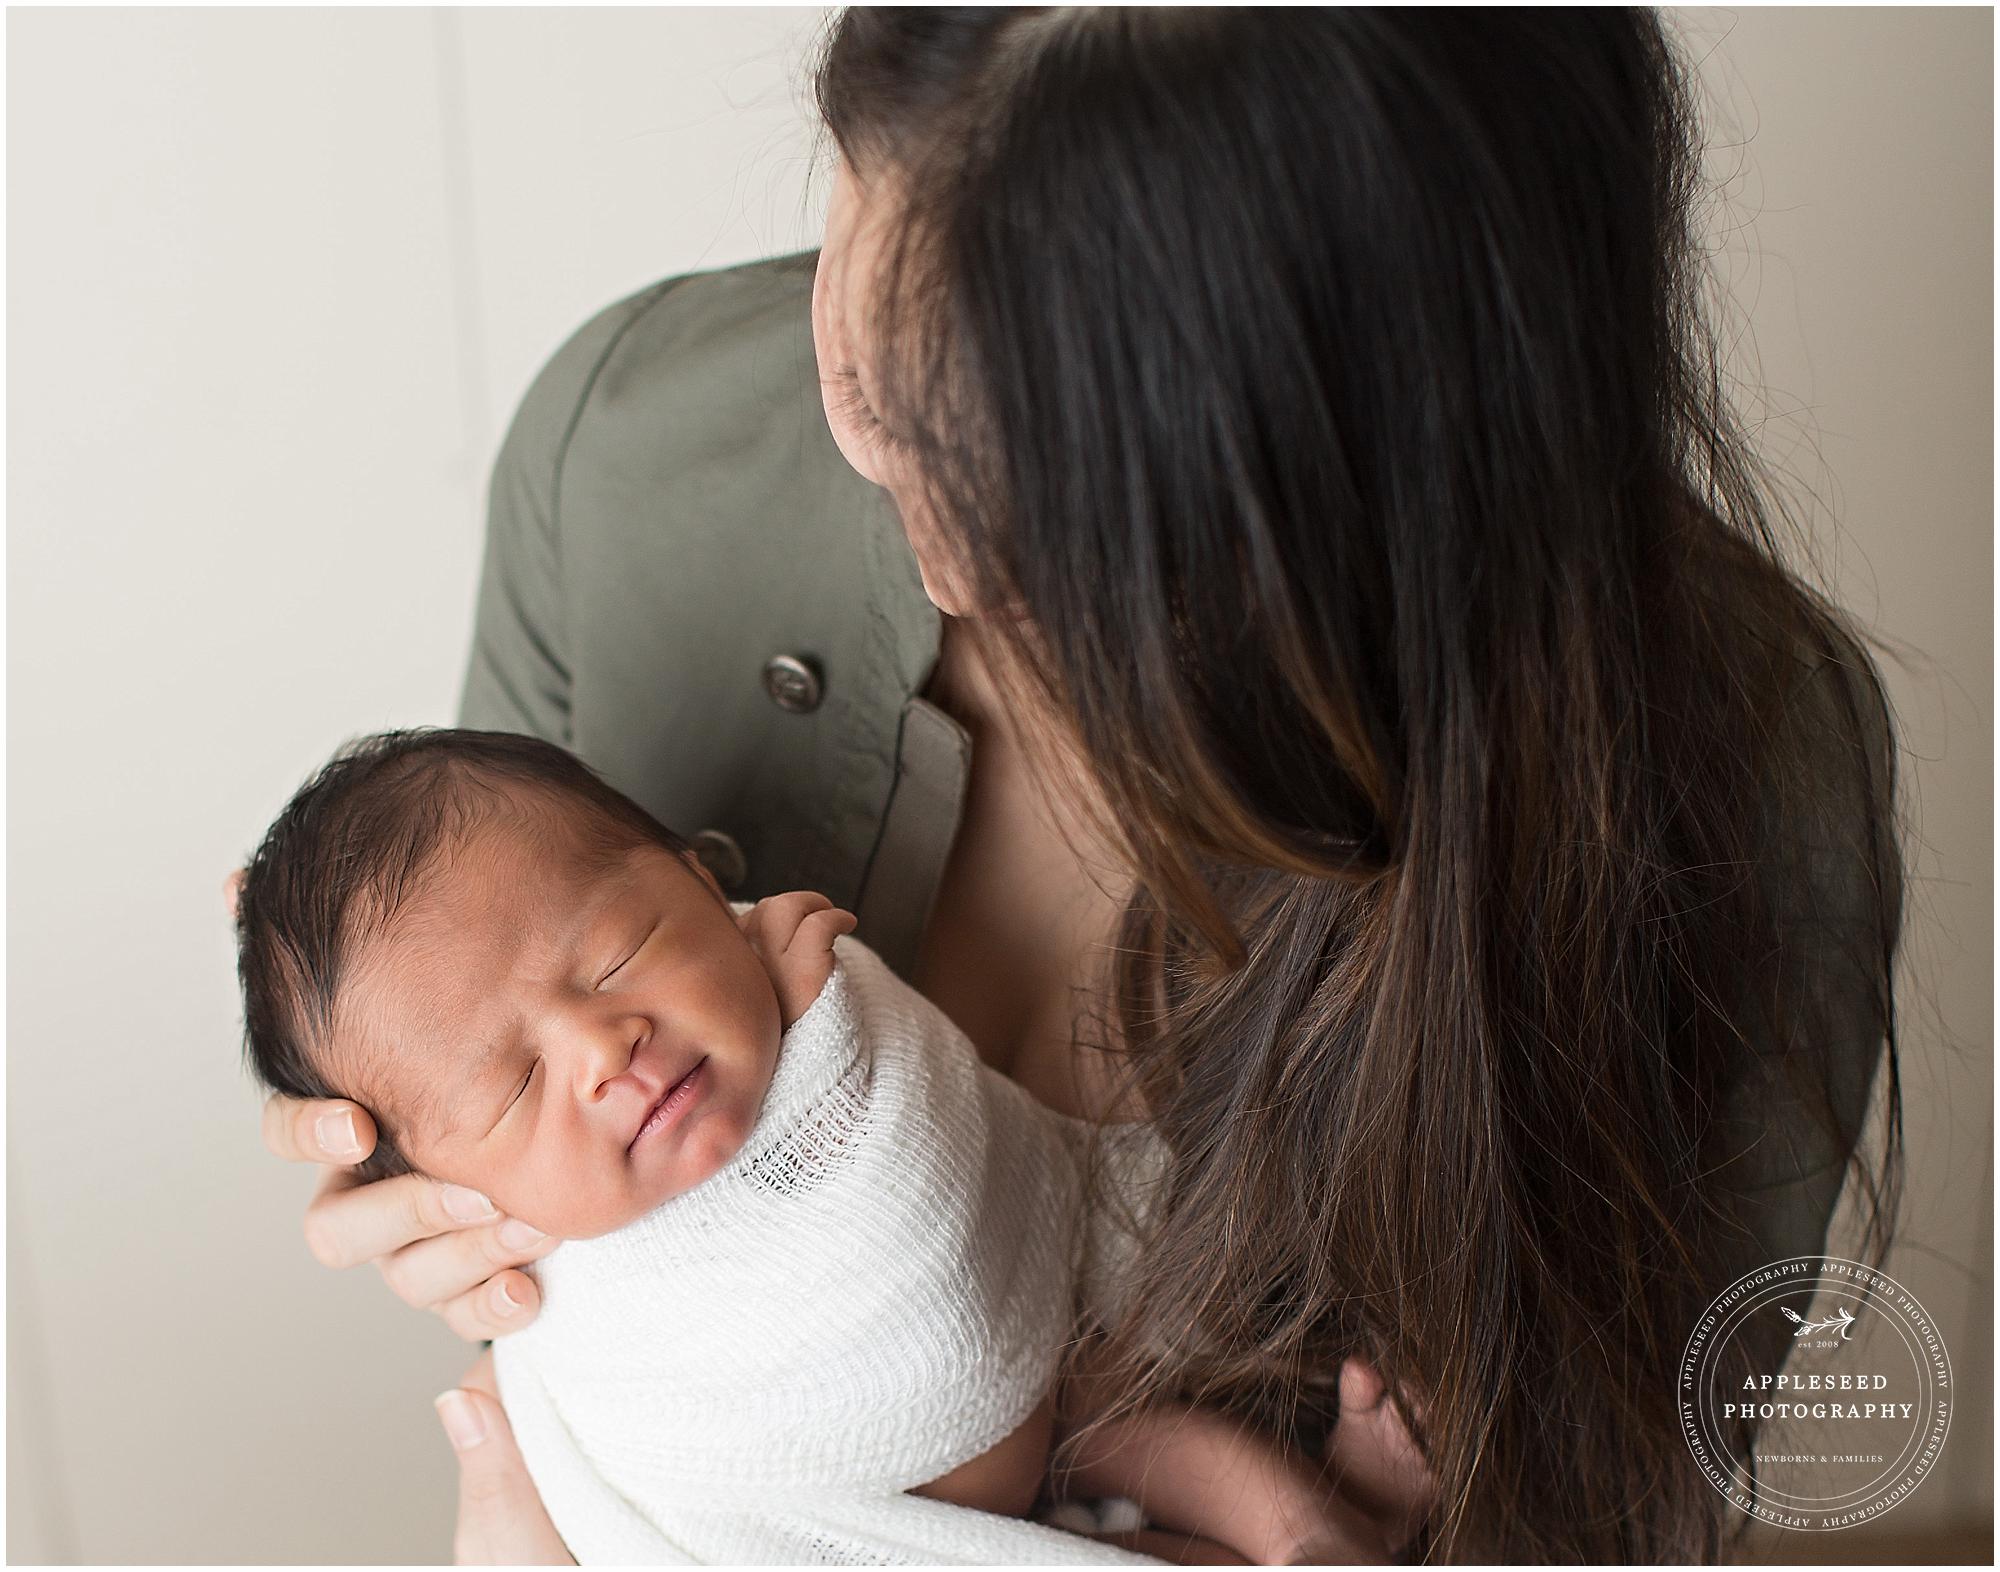 Newborn Photography Atlanta | Sweet Baby Boy | Appleseed Photography